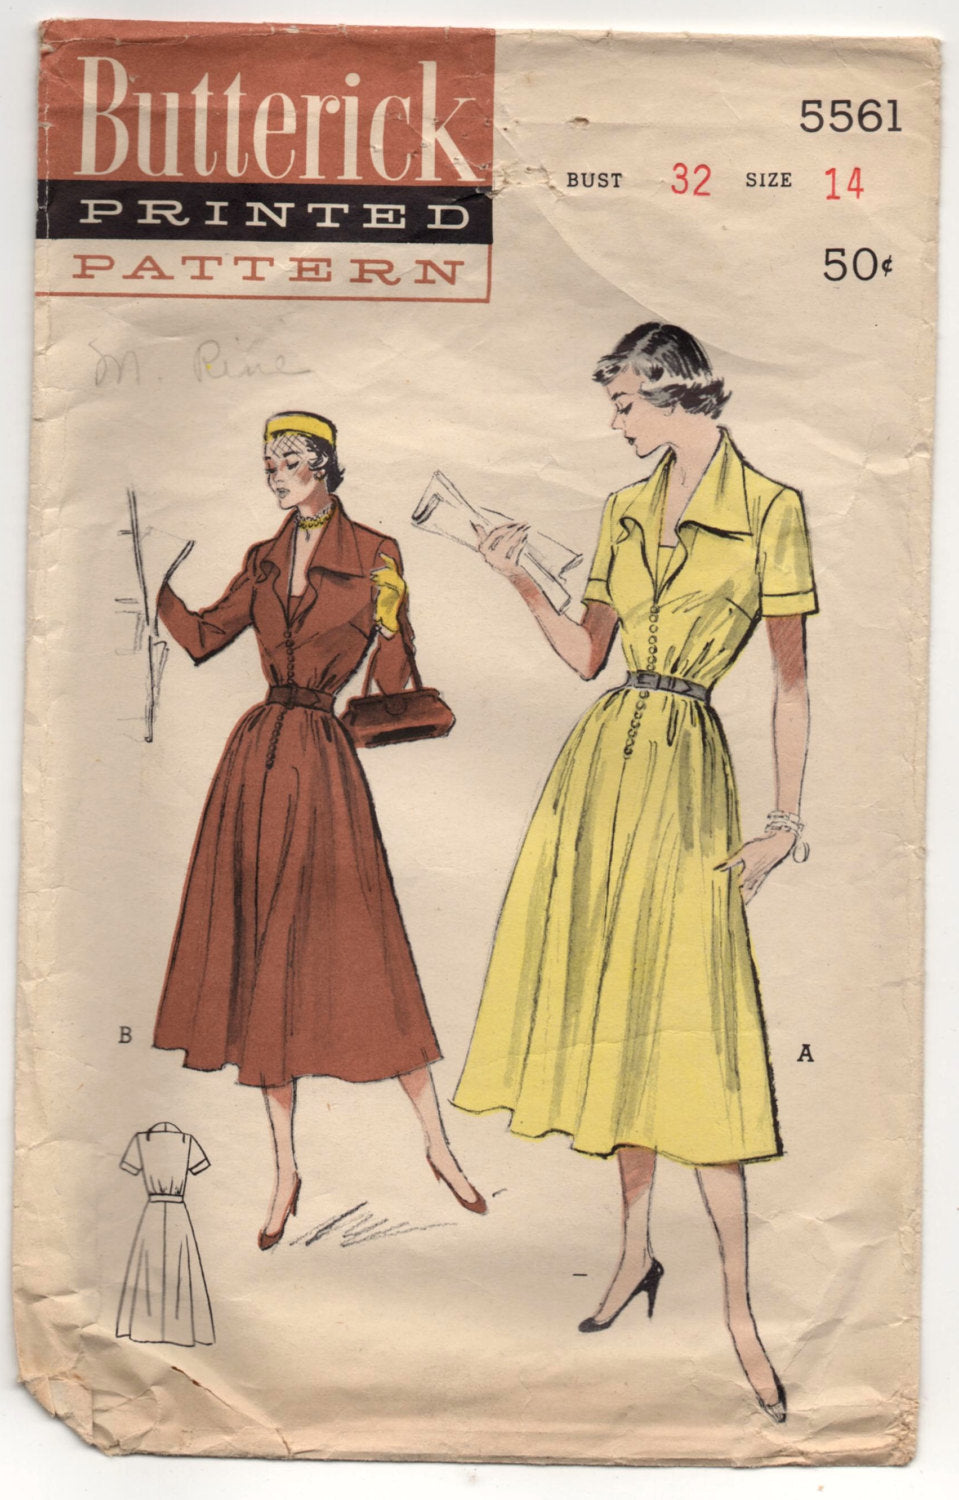 1950's Butterick One-Piece Dress with Flyaway Collar Pattern - Bust 32